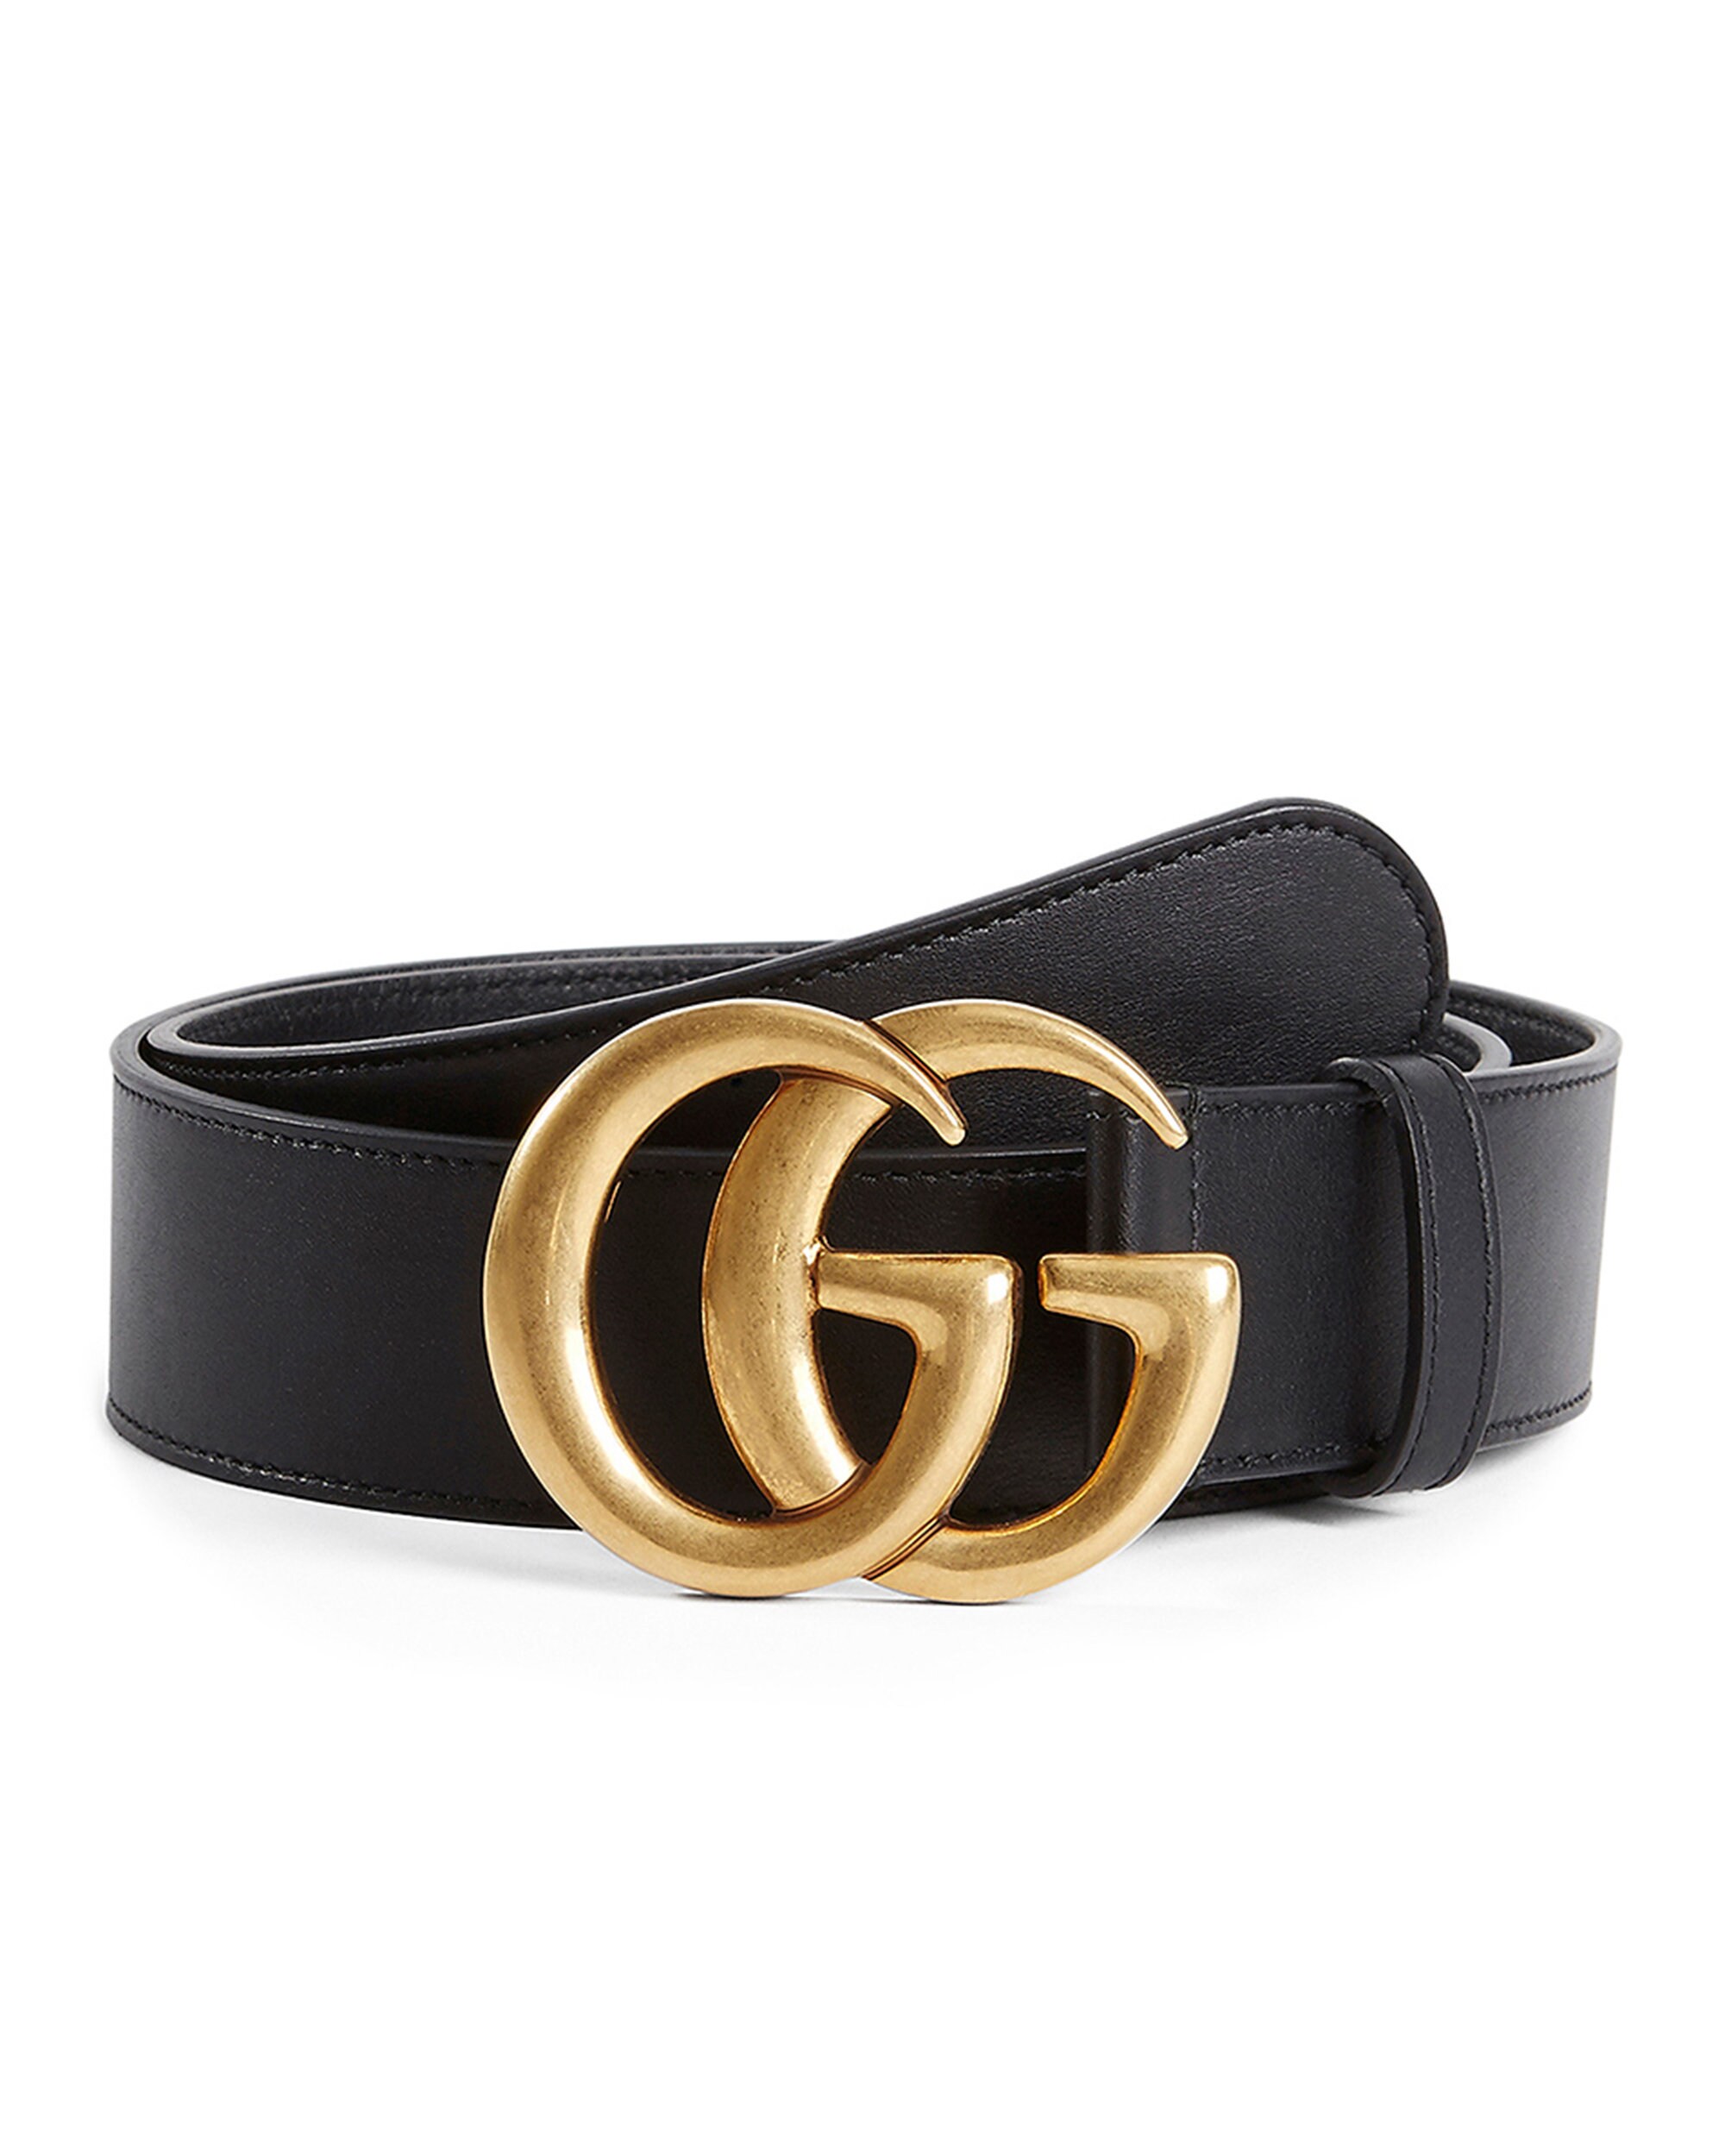 Luxury GG Designer Belt With Box High Quality Genuine Leather | Etsy